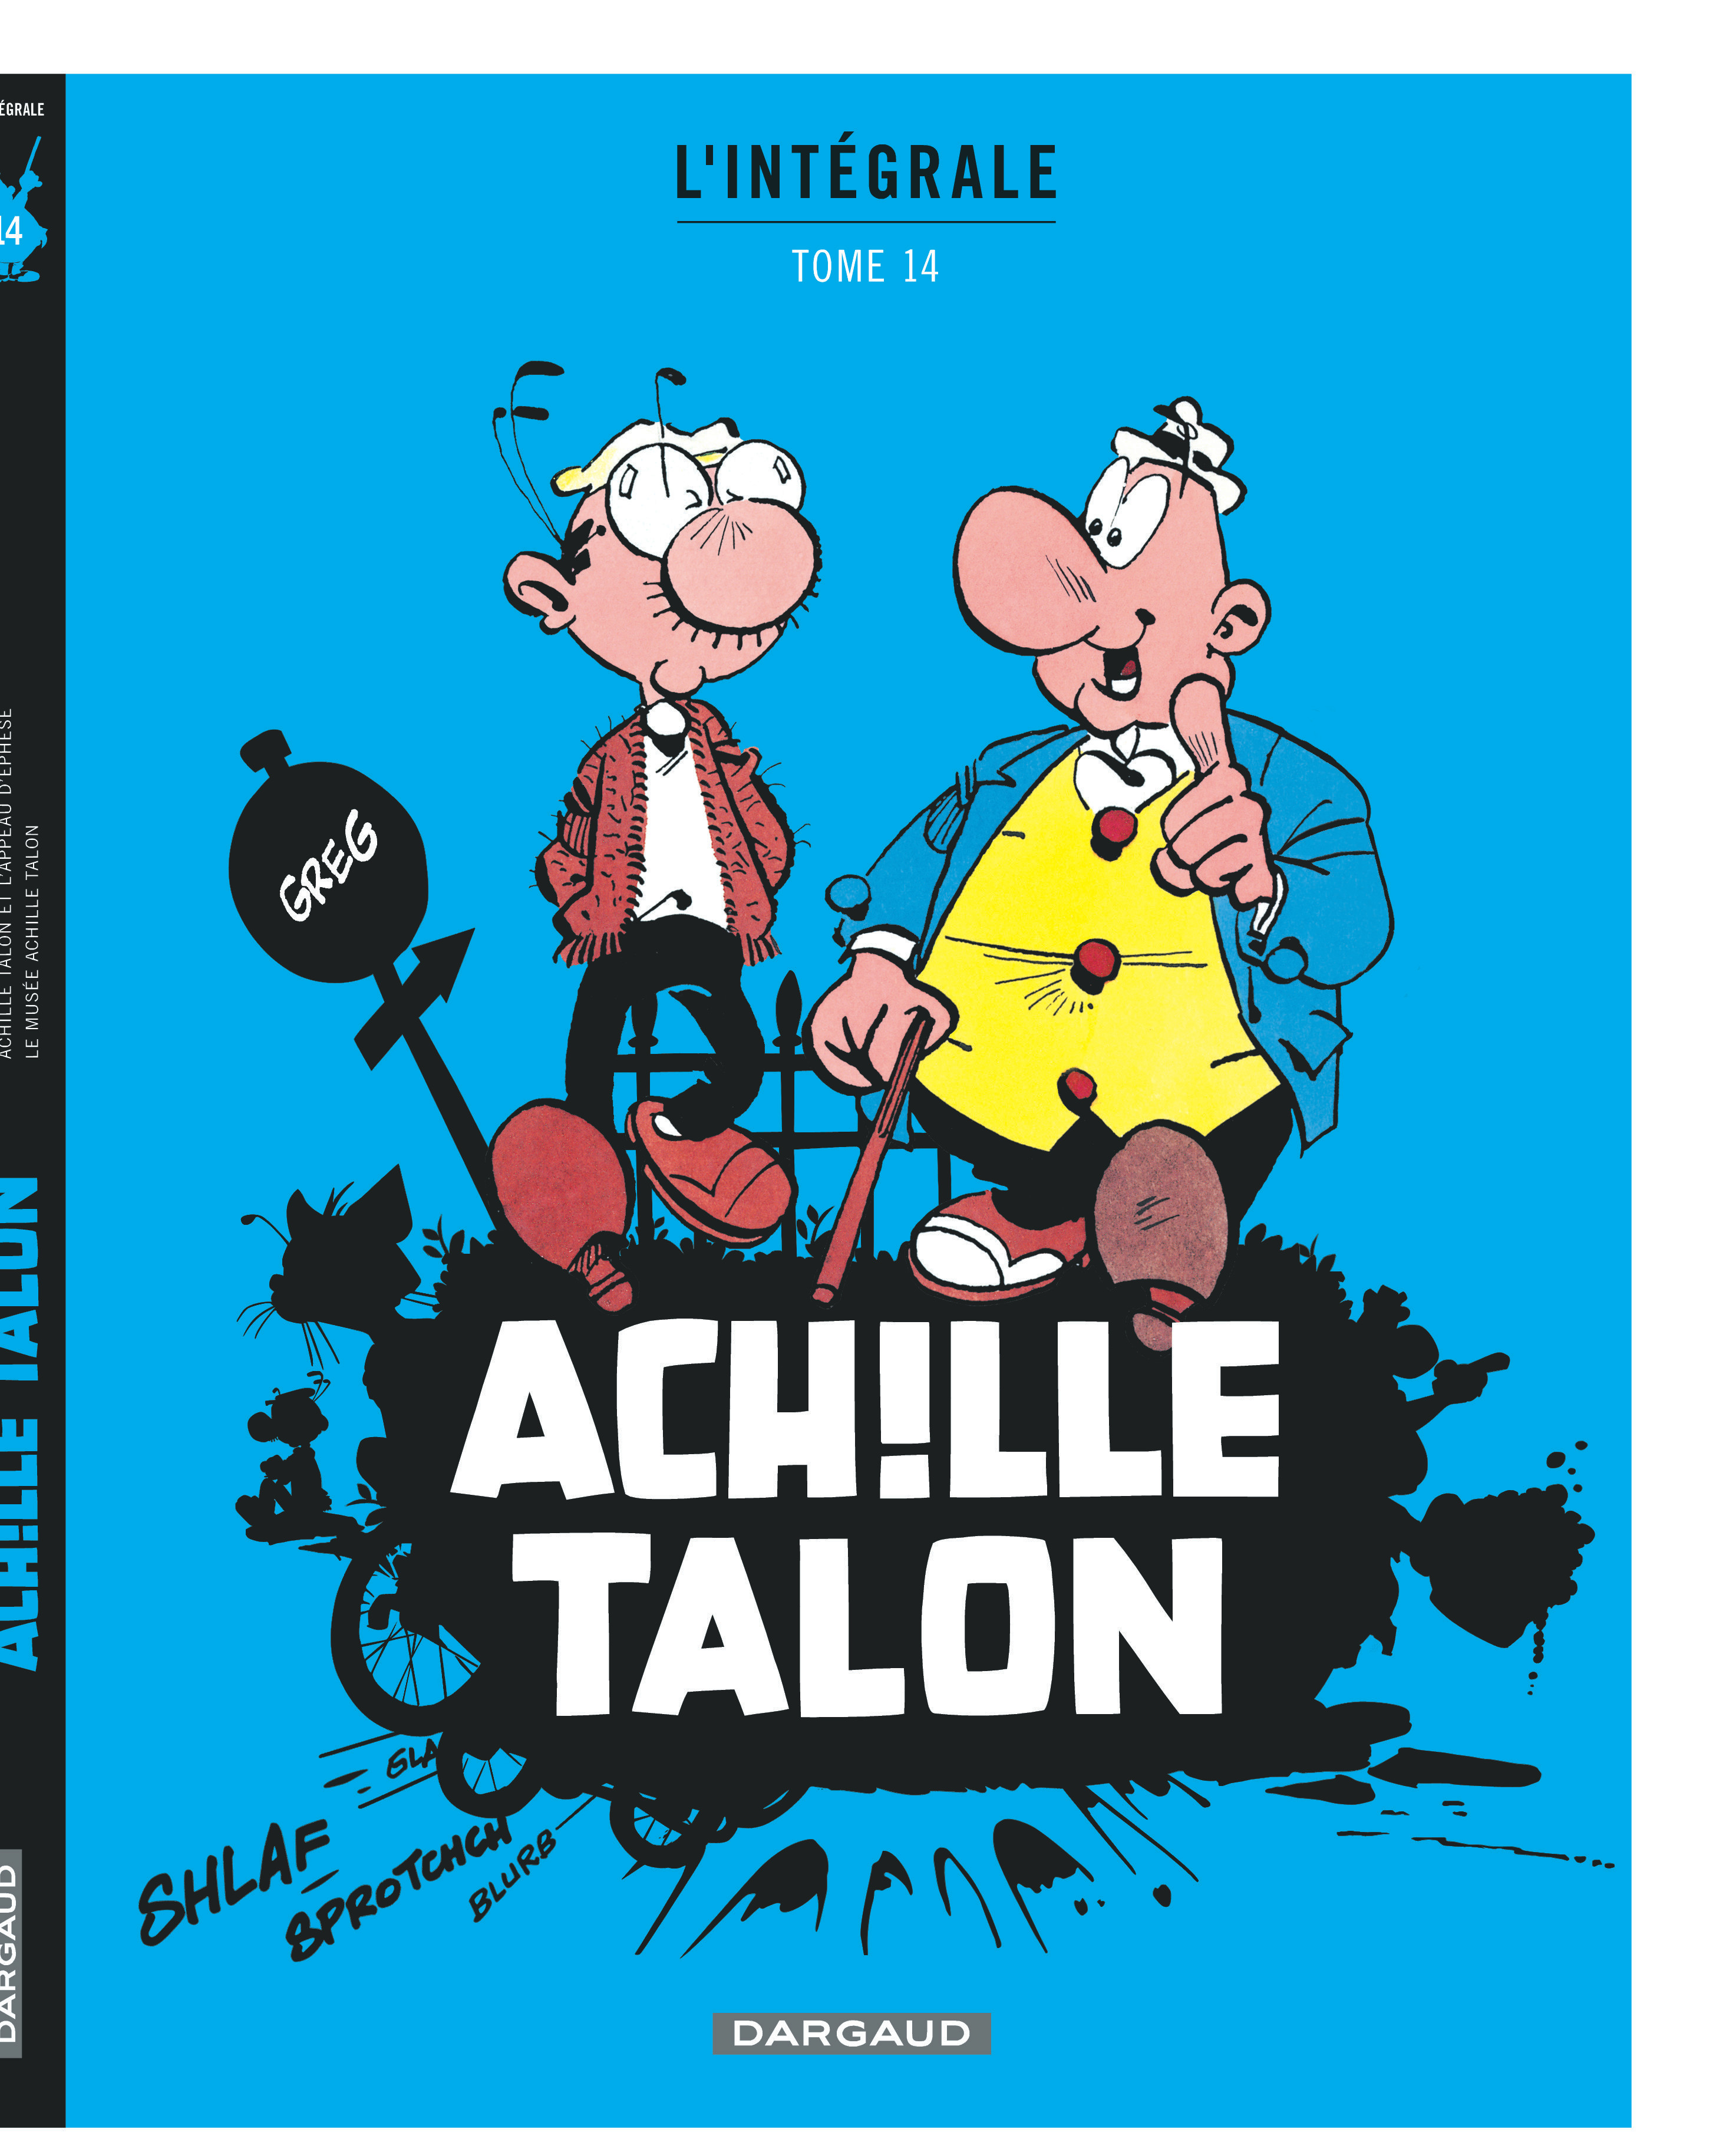 Achille Talon - Intégrales – Tome 14 – Mon Oeuvre à moi - tome 14 - couv